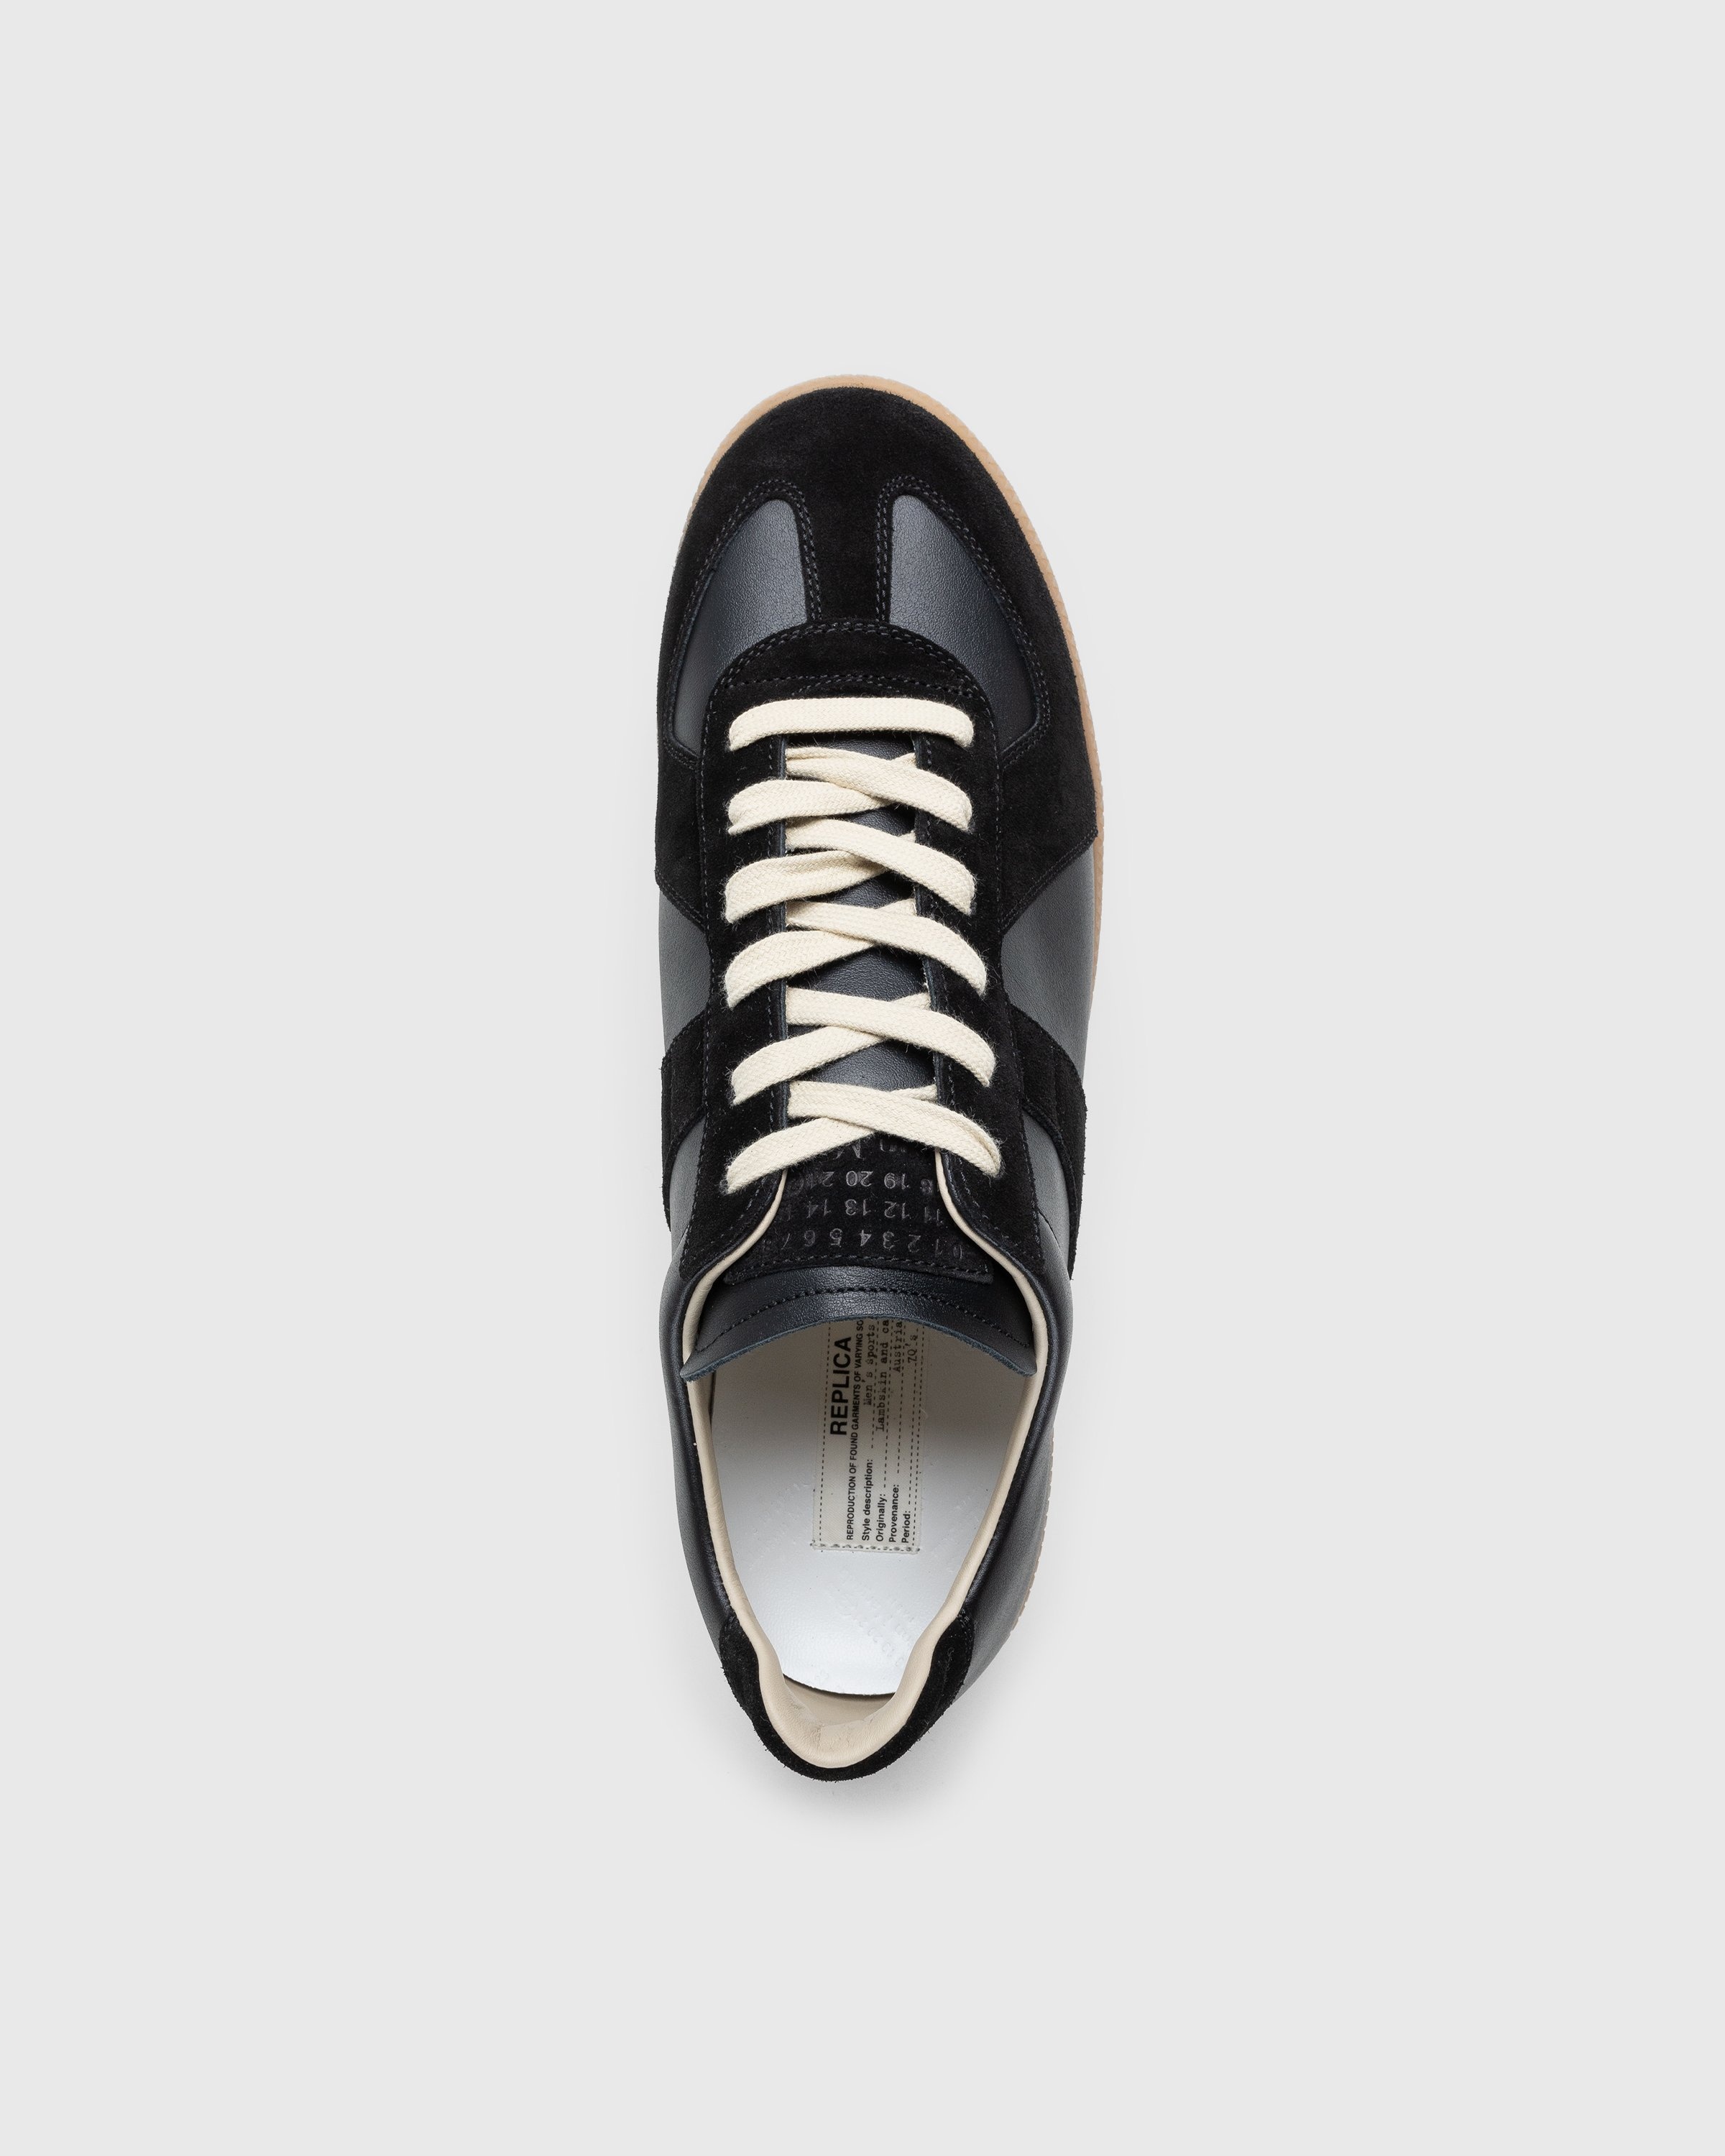 Maison Margiela – Leather Replica Sneakers Black - Low Top Sneakers - Black - Image 5